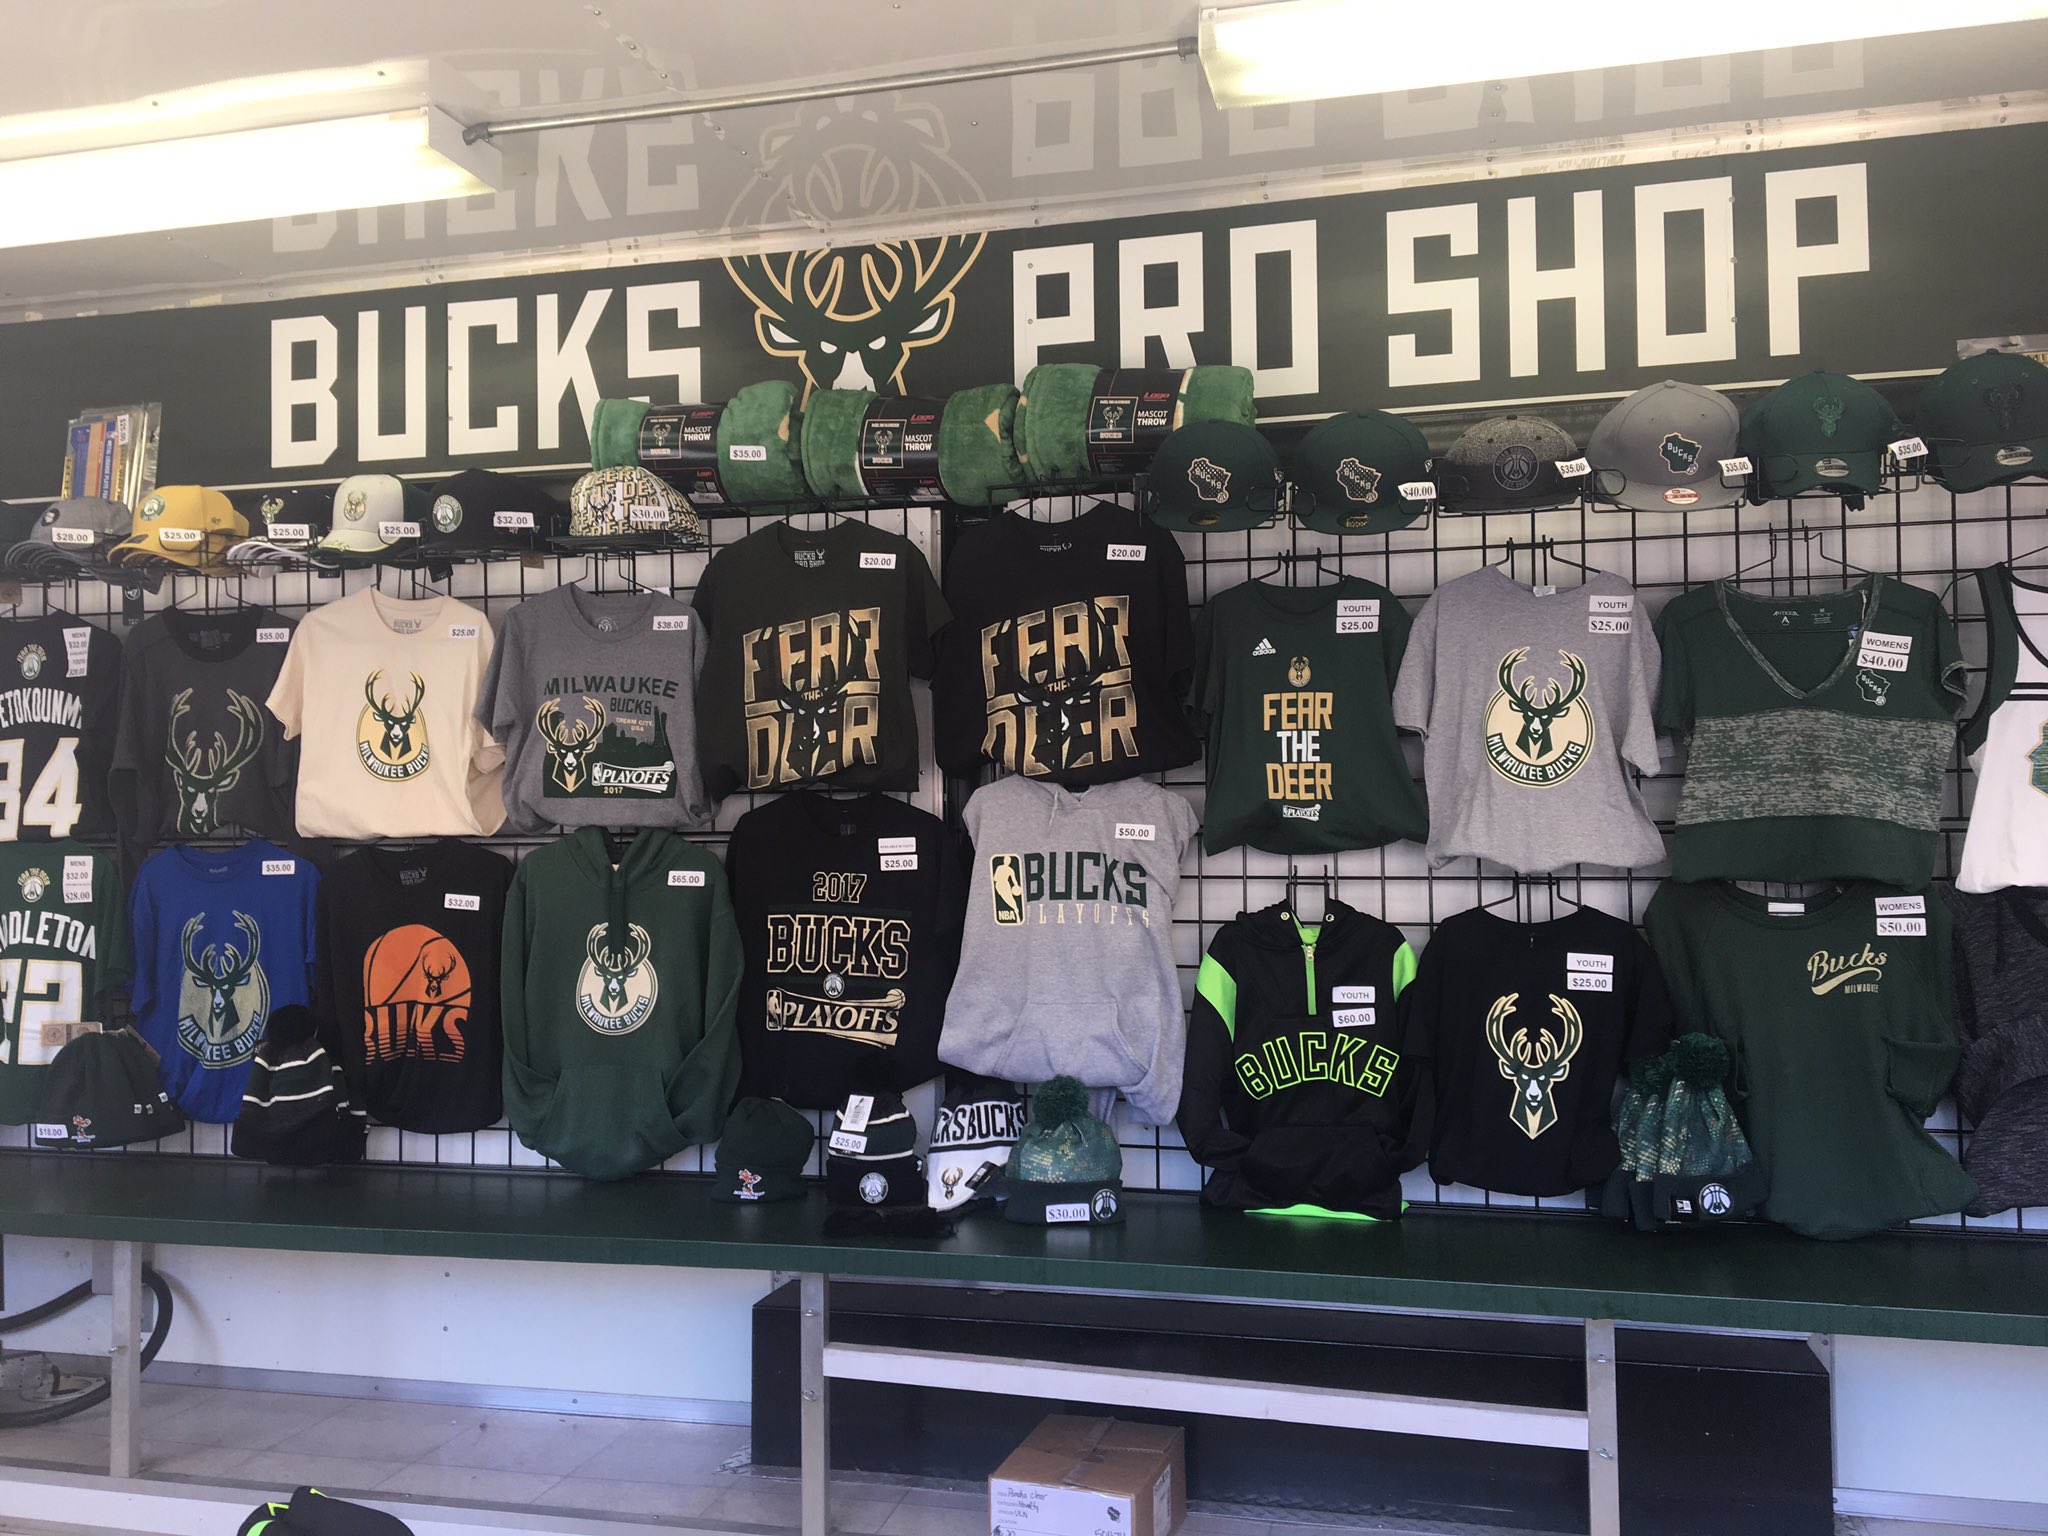 Bucks Pro Shop (@BucksProShop) / X